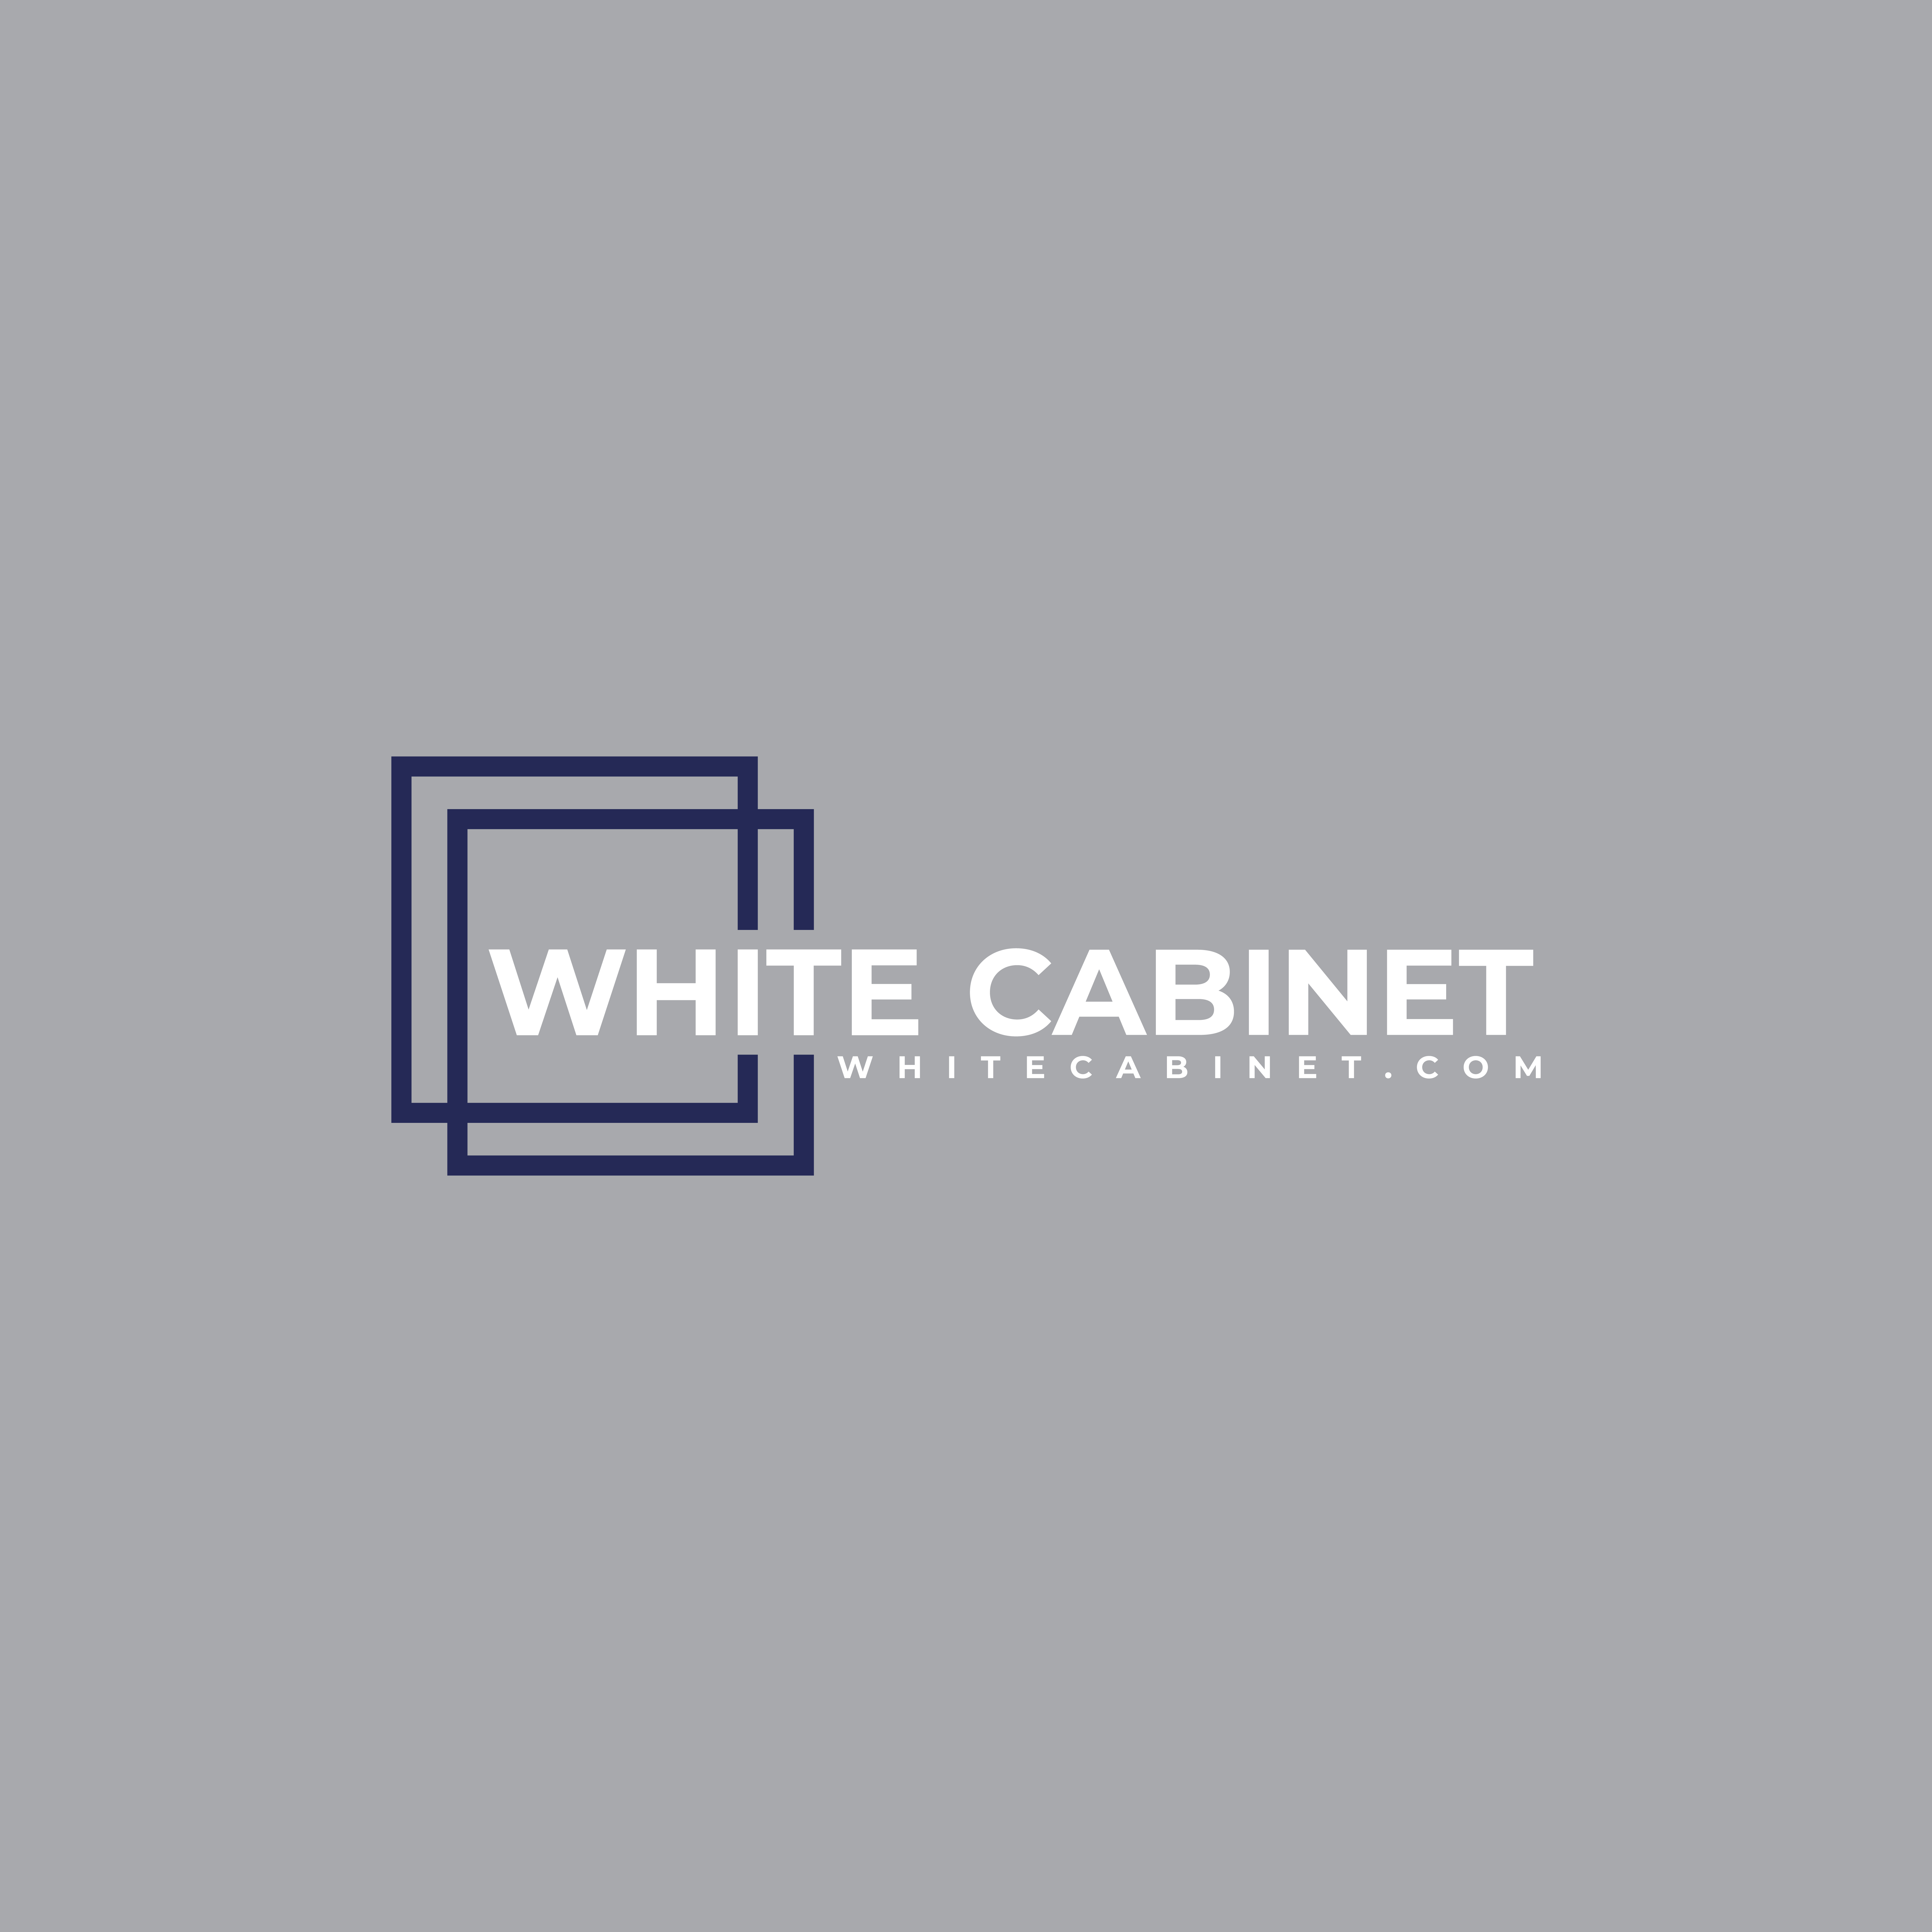 White Cabinet Corporation Logo